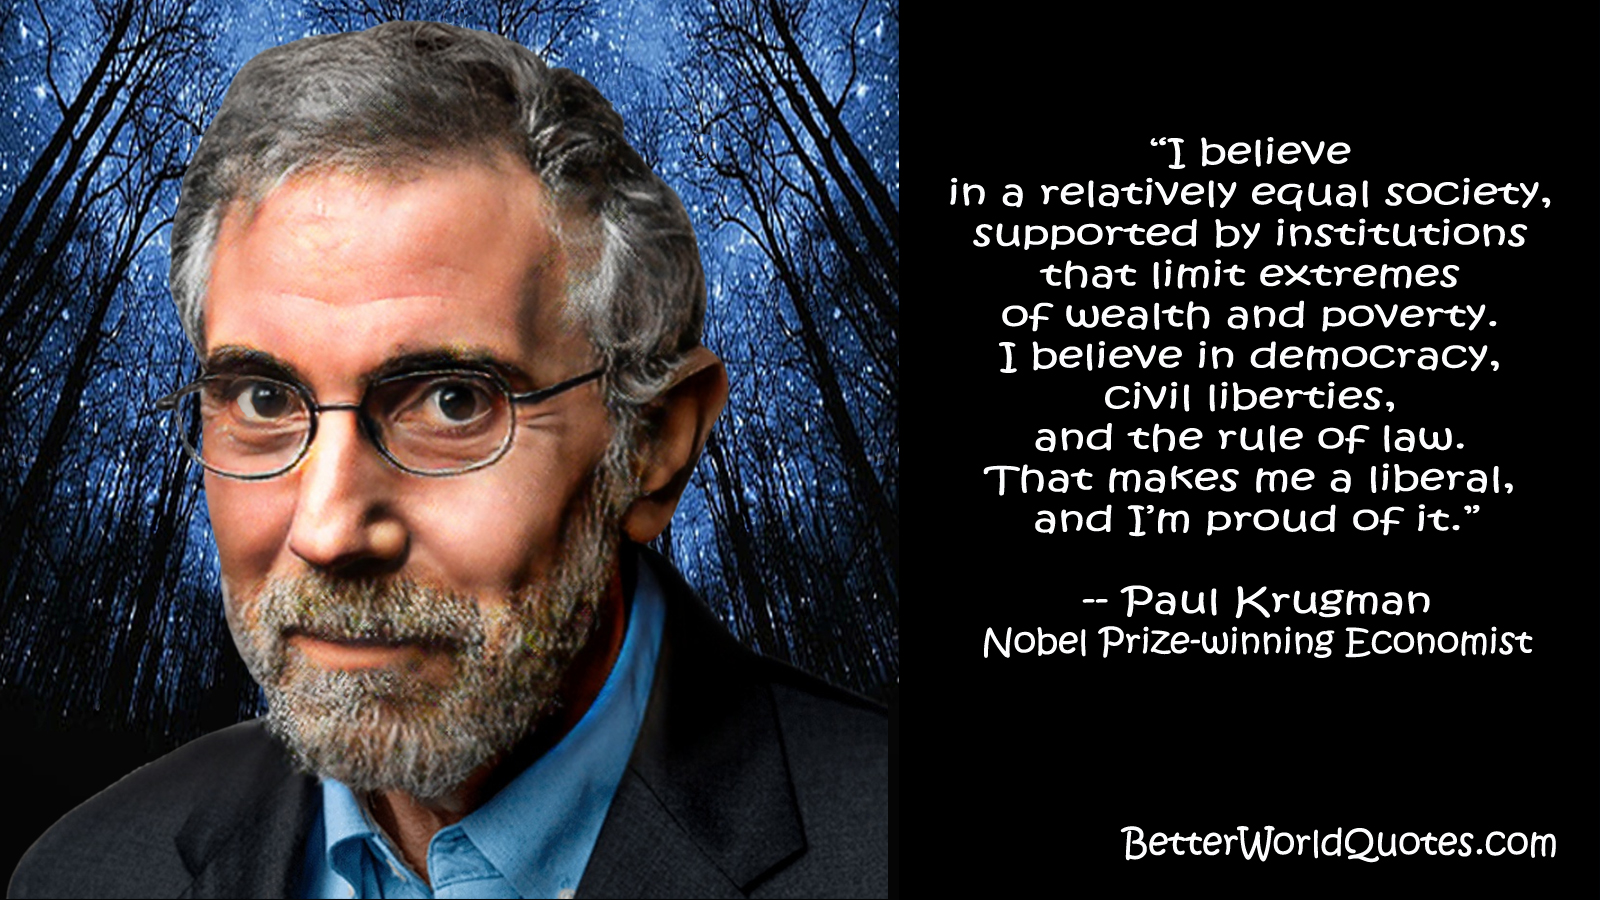 Paul Krugman; 